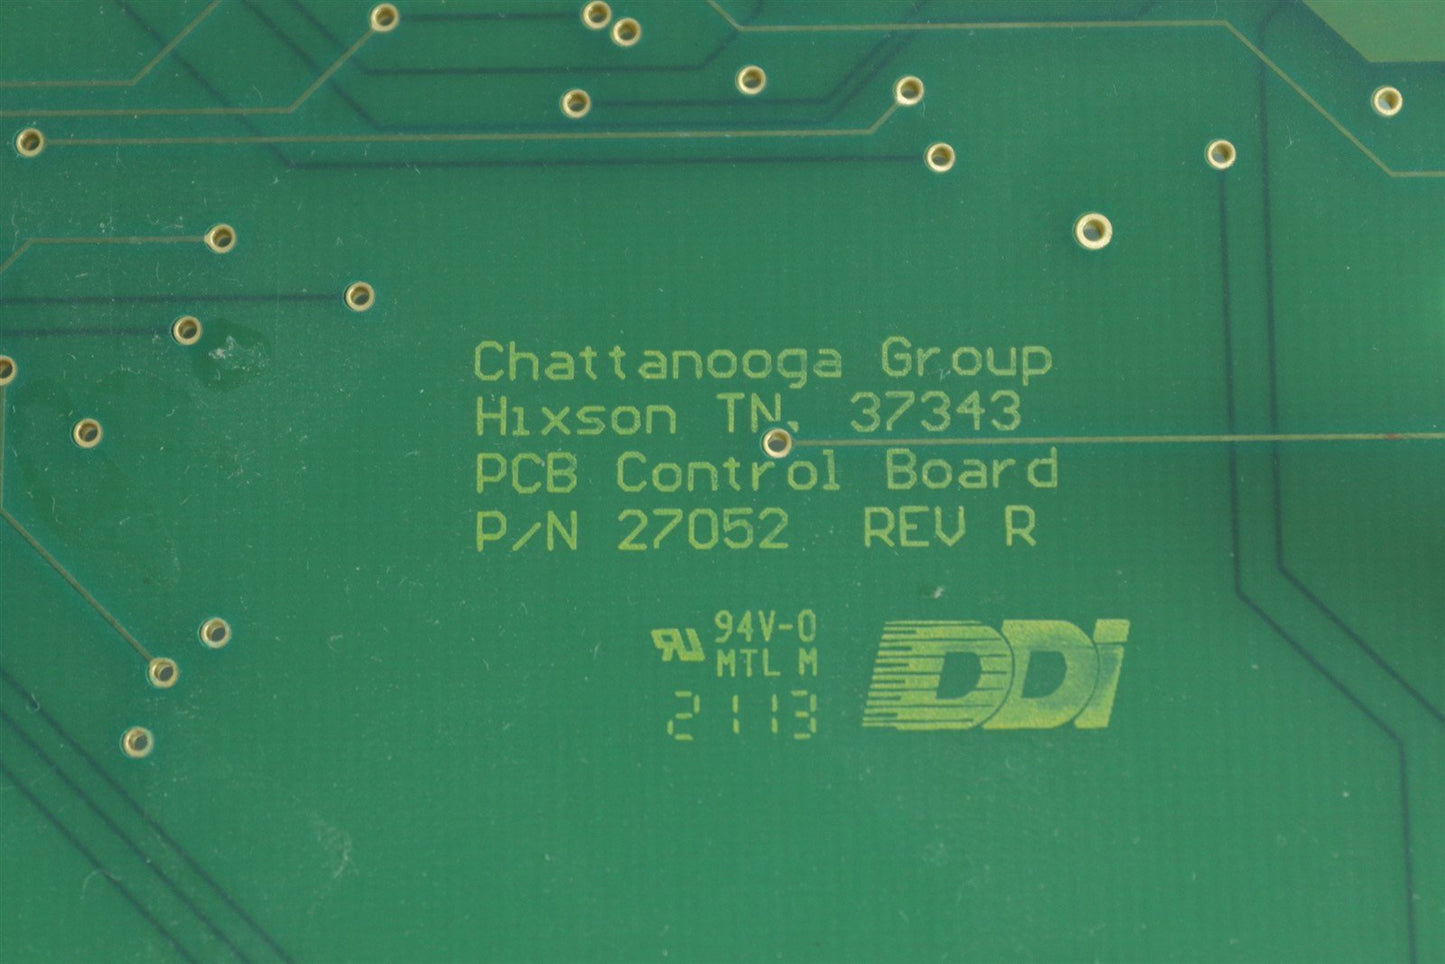 Chattanooga Group Intelect Advanced Color Combo 2752CC pcb control board 27052